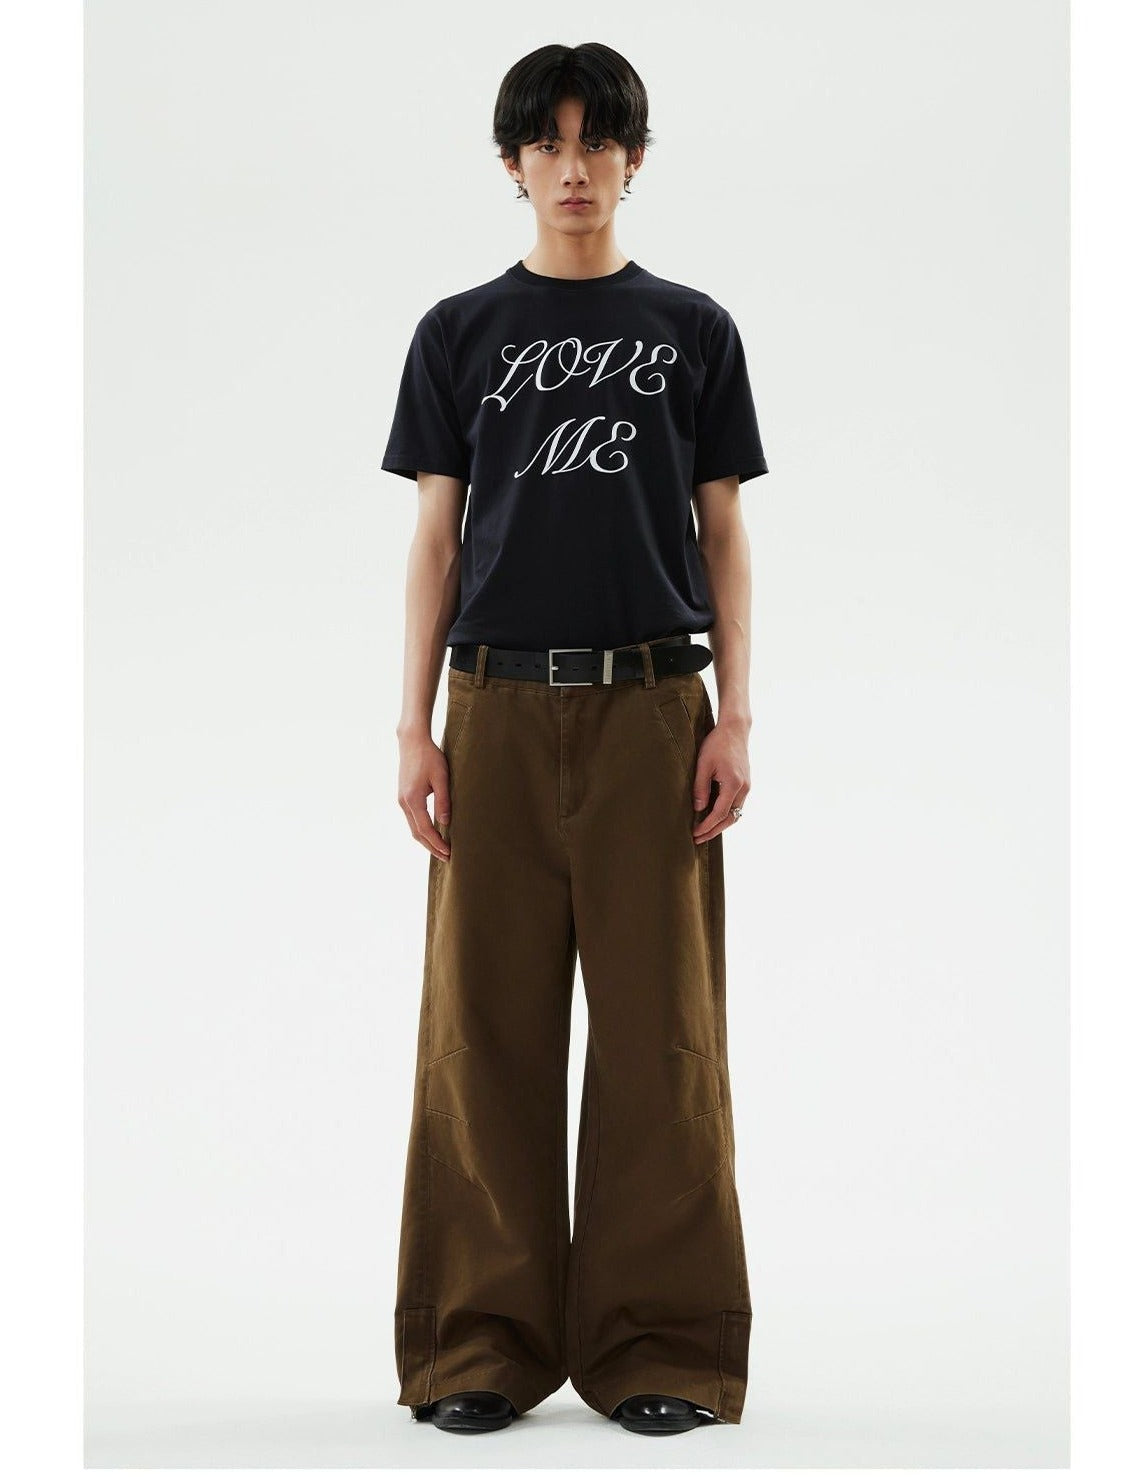 Cursive Love Me Text Long Sleeve T-Shirt Korean Street Fashion T-Shirt By Funky Fun Shop Online at OH Vault